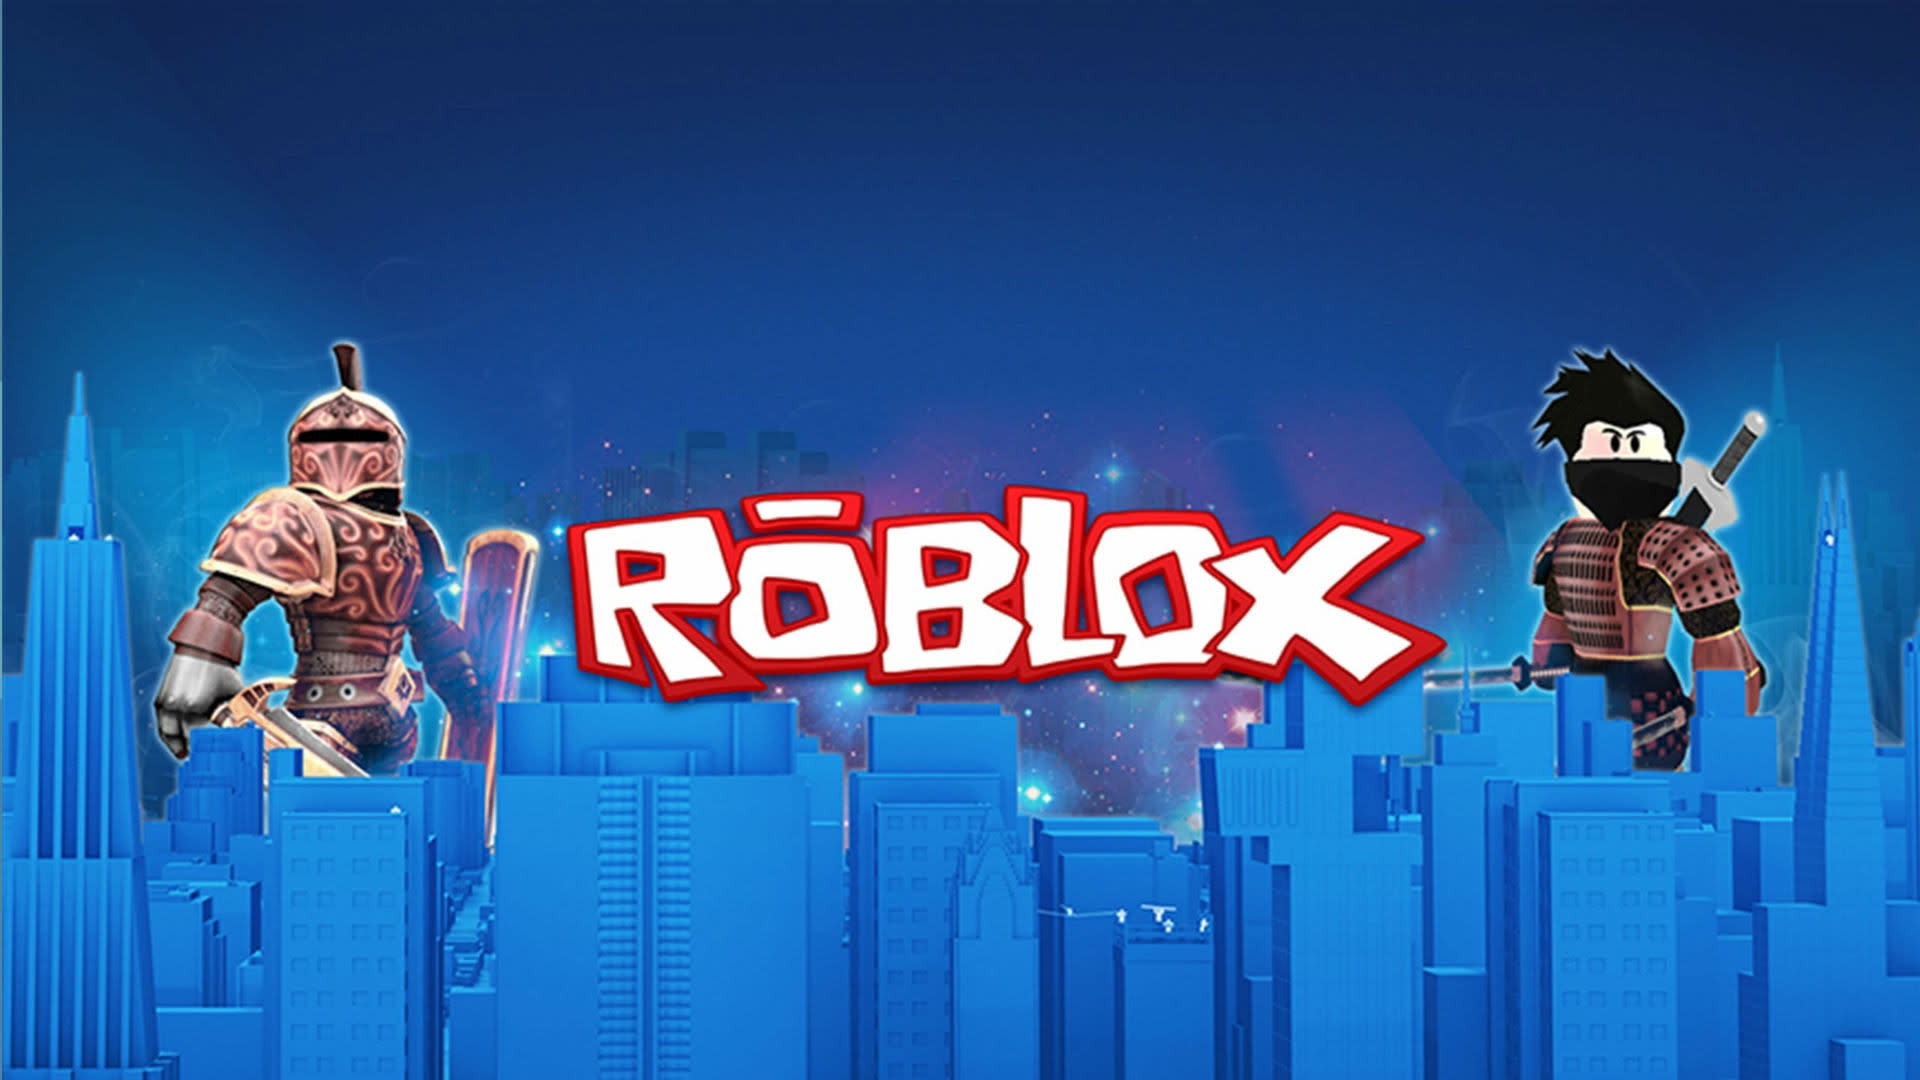 Roblox Enters Vr Space With Cross Platform Support - roblox game main script robert s tech portfolio